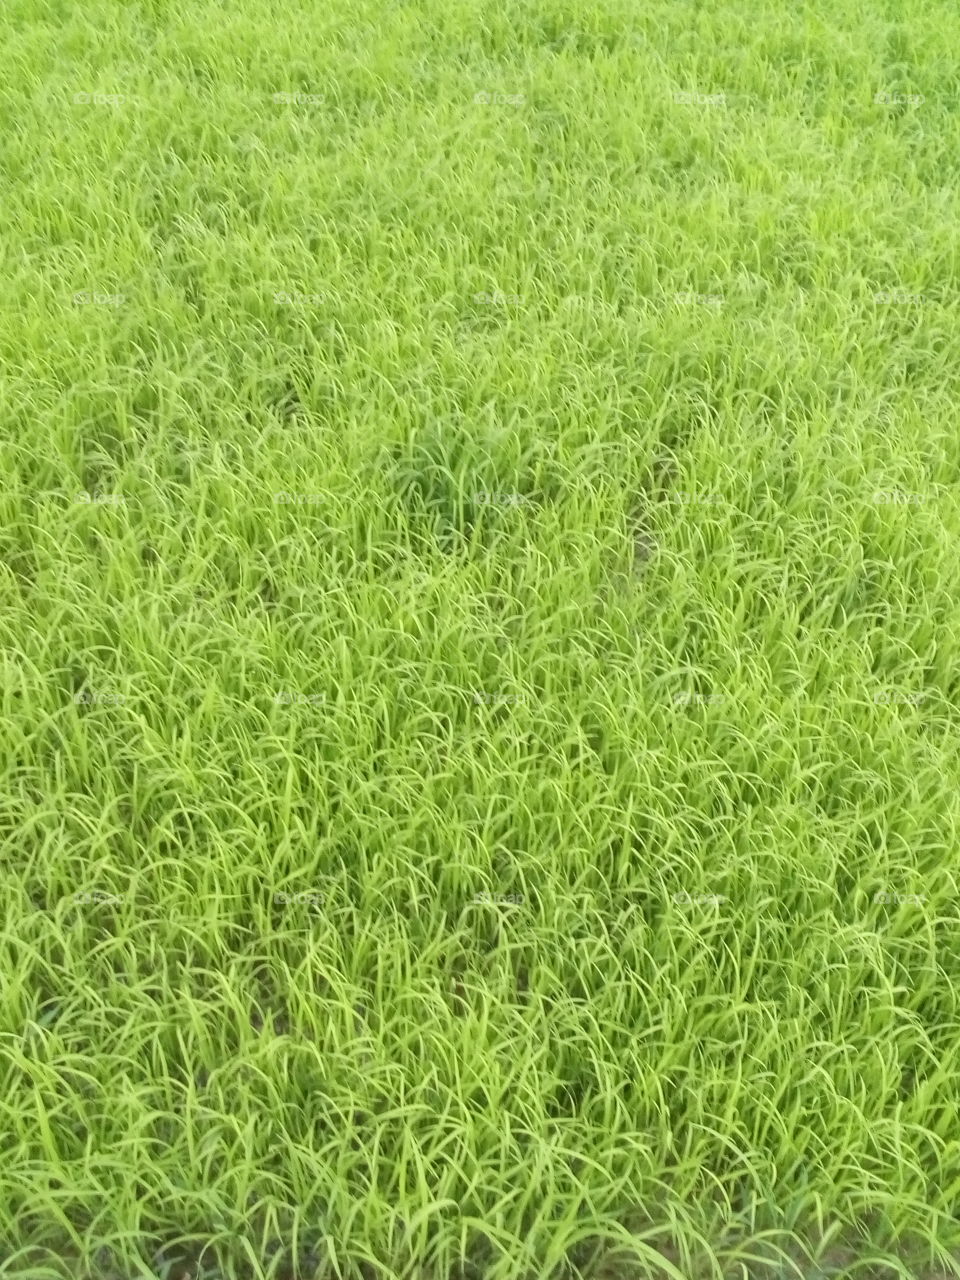 Grass, Lawn, Turf, Yard, Growth